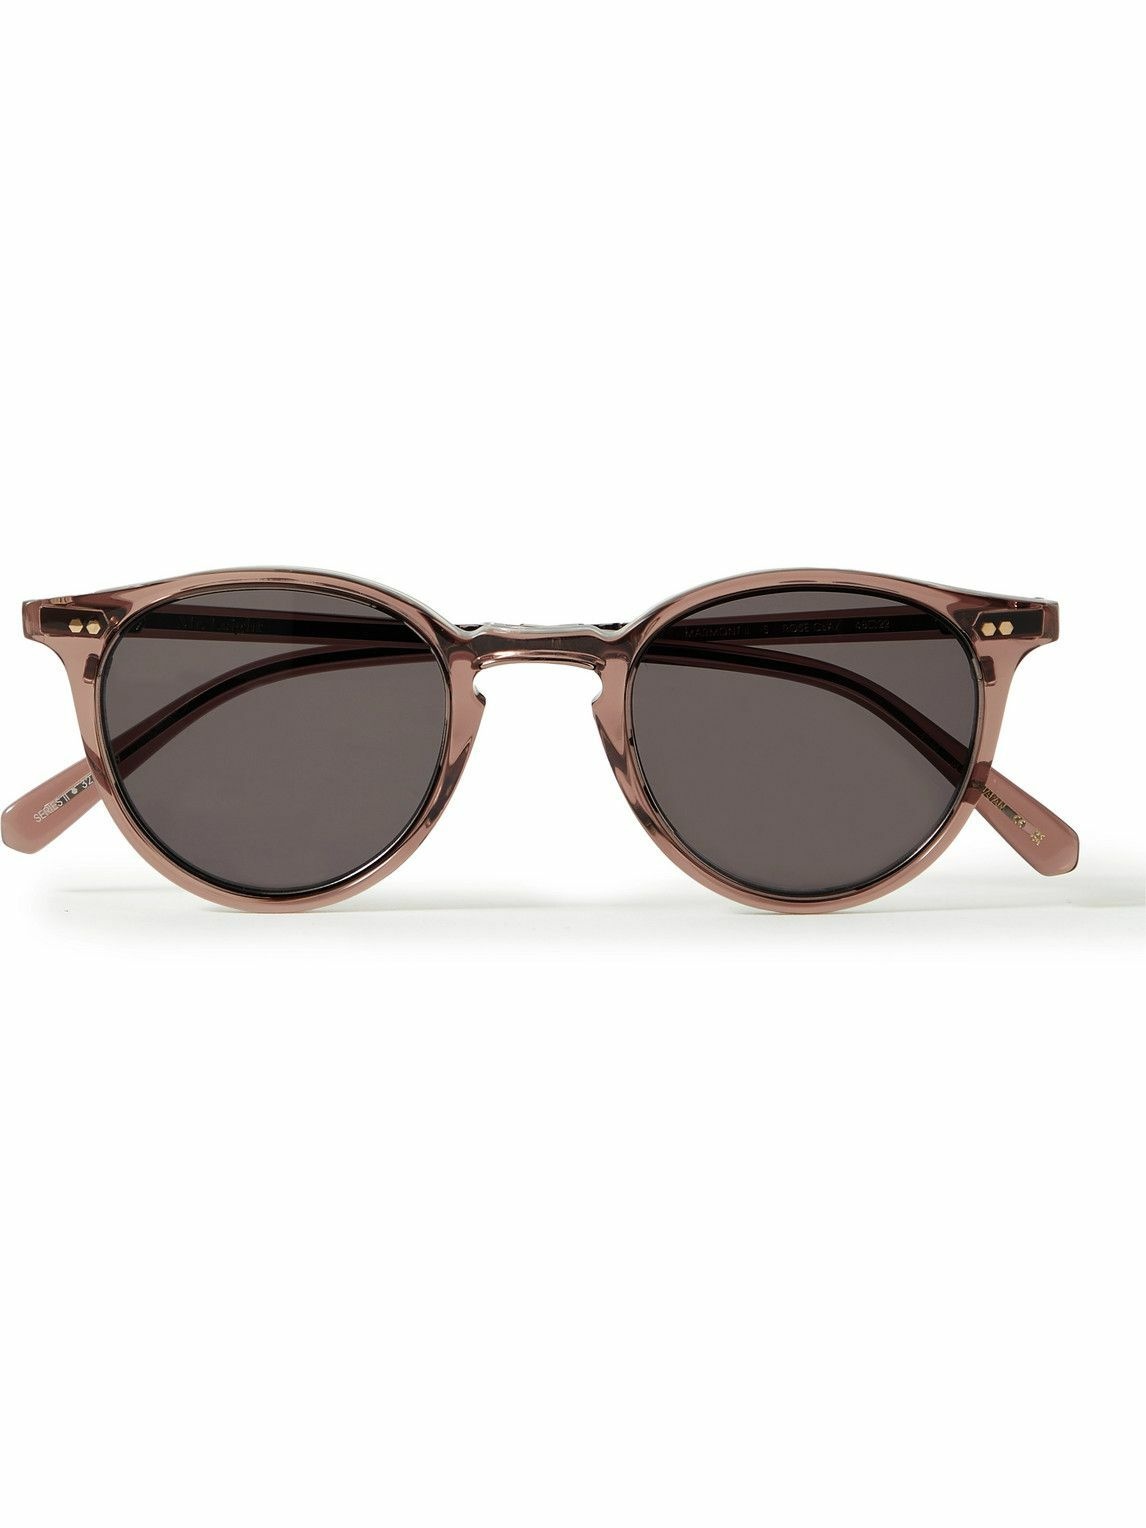 Photo: Mr Leight - Marmont II S Round-Frame Acetate Sunglasses